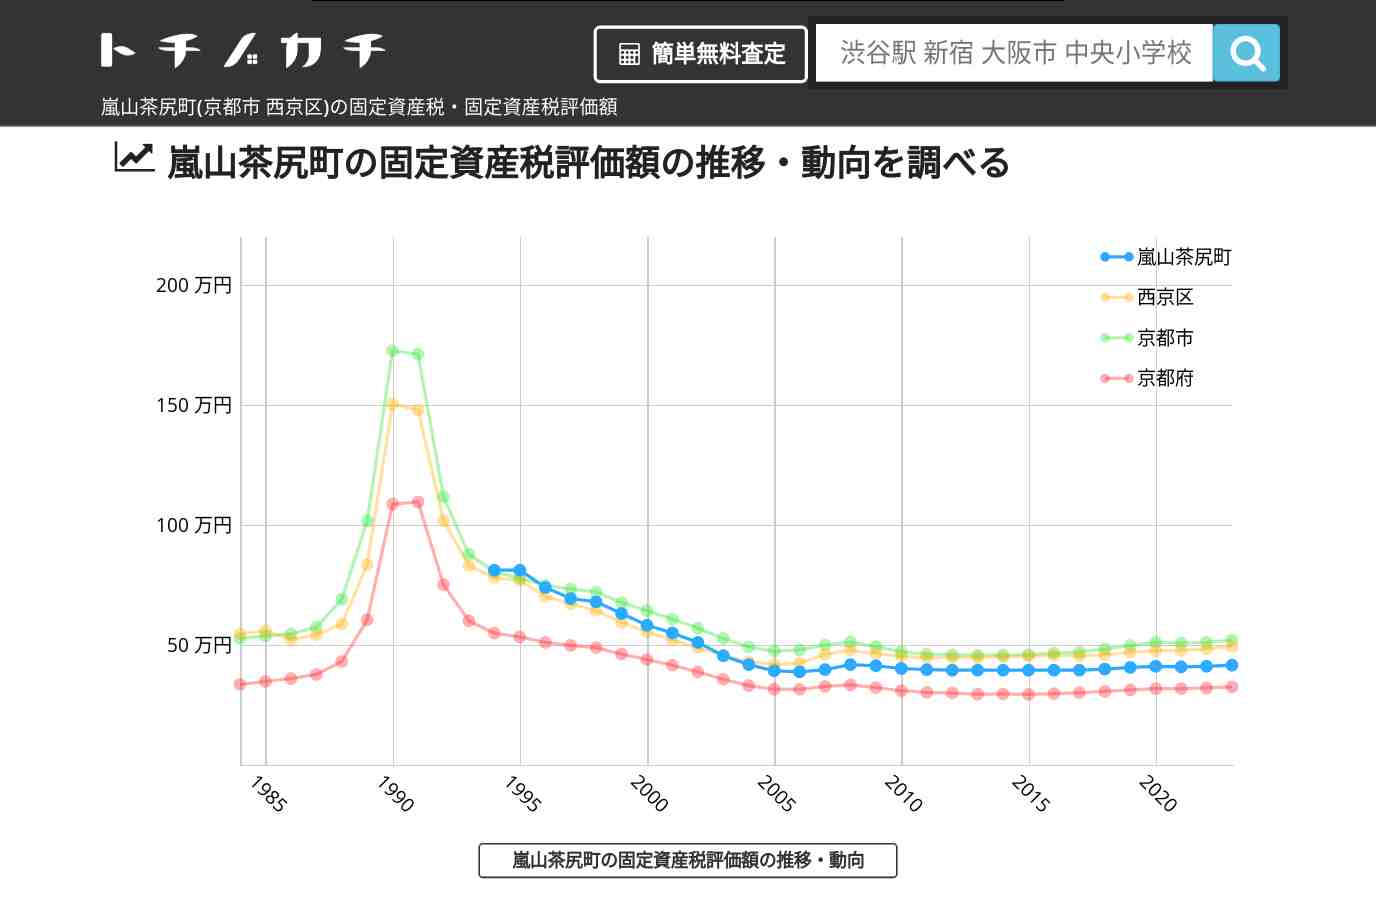 嵐山茶尻町(西京区)の固定資産税・固定資産税評価額 | トチノカチ